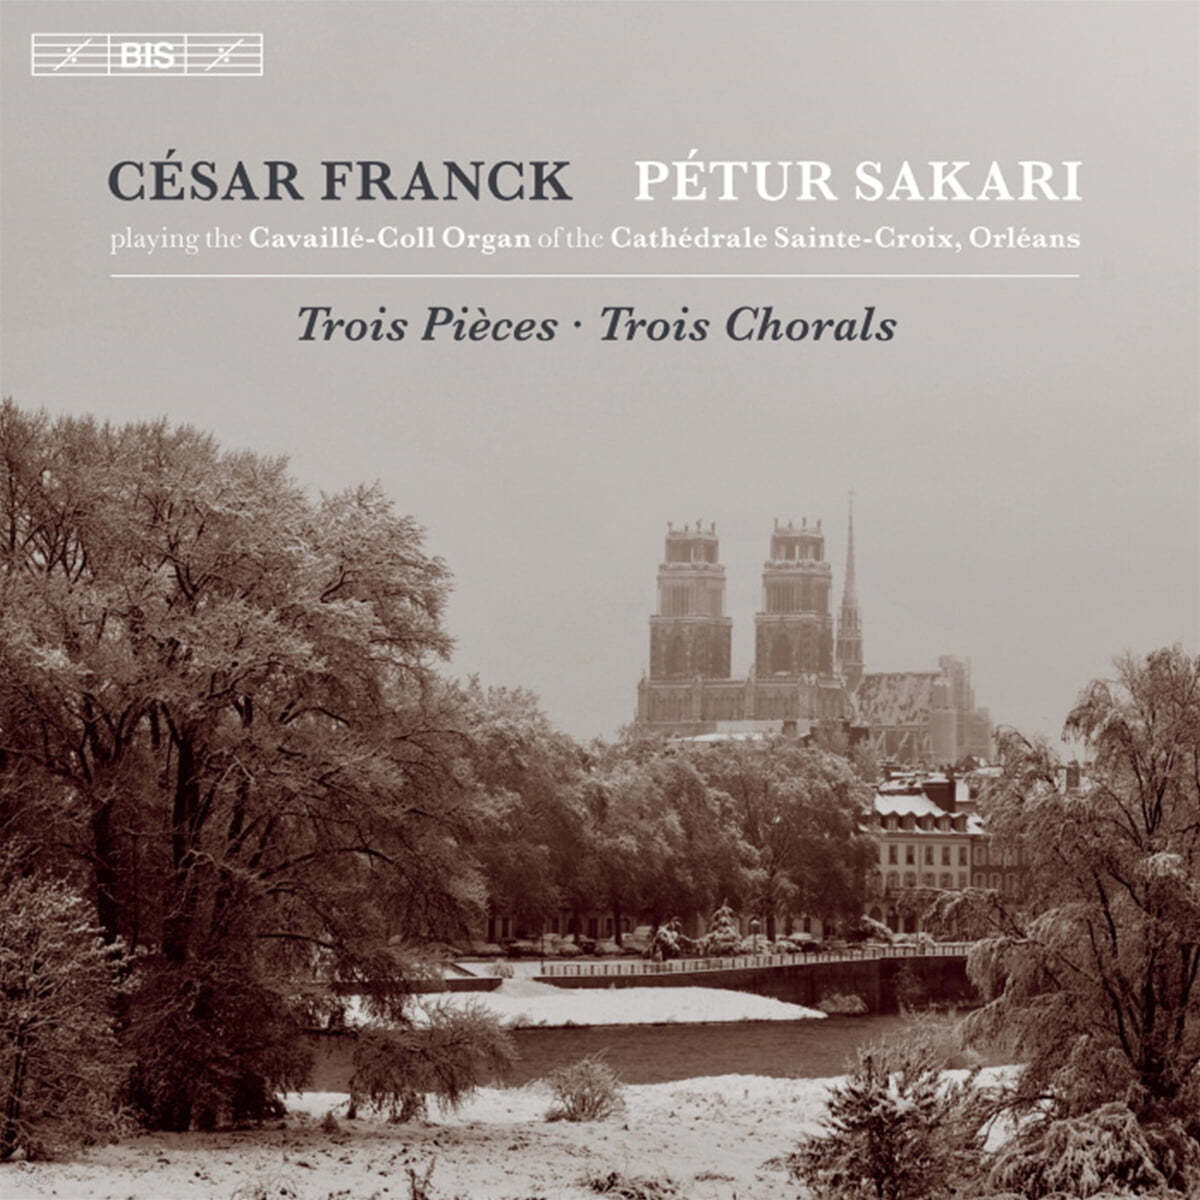 Petur Sakari 프랑크: 그랜드 오르간을 위한 소품과 코랄 (Franck: Trois Pieces Pour Grand Orgue, Trois Chorals Pour Grand Orgue) 